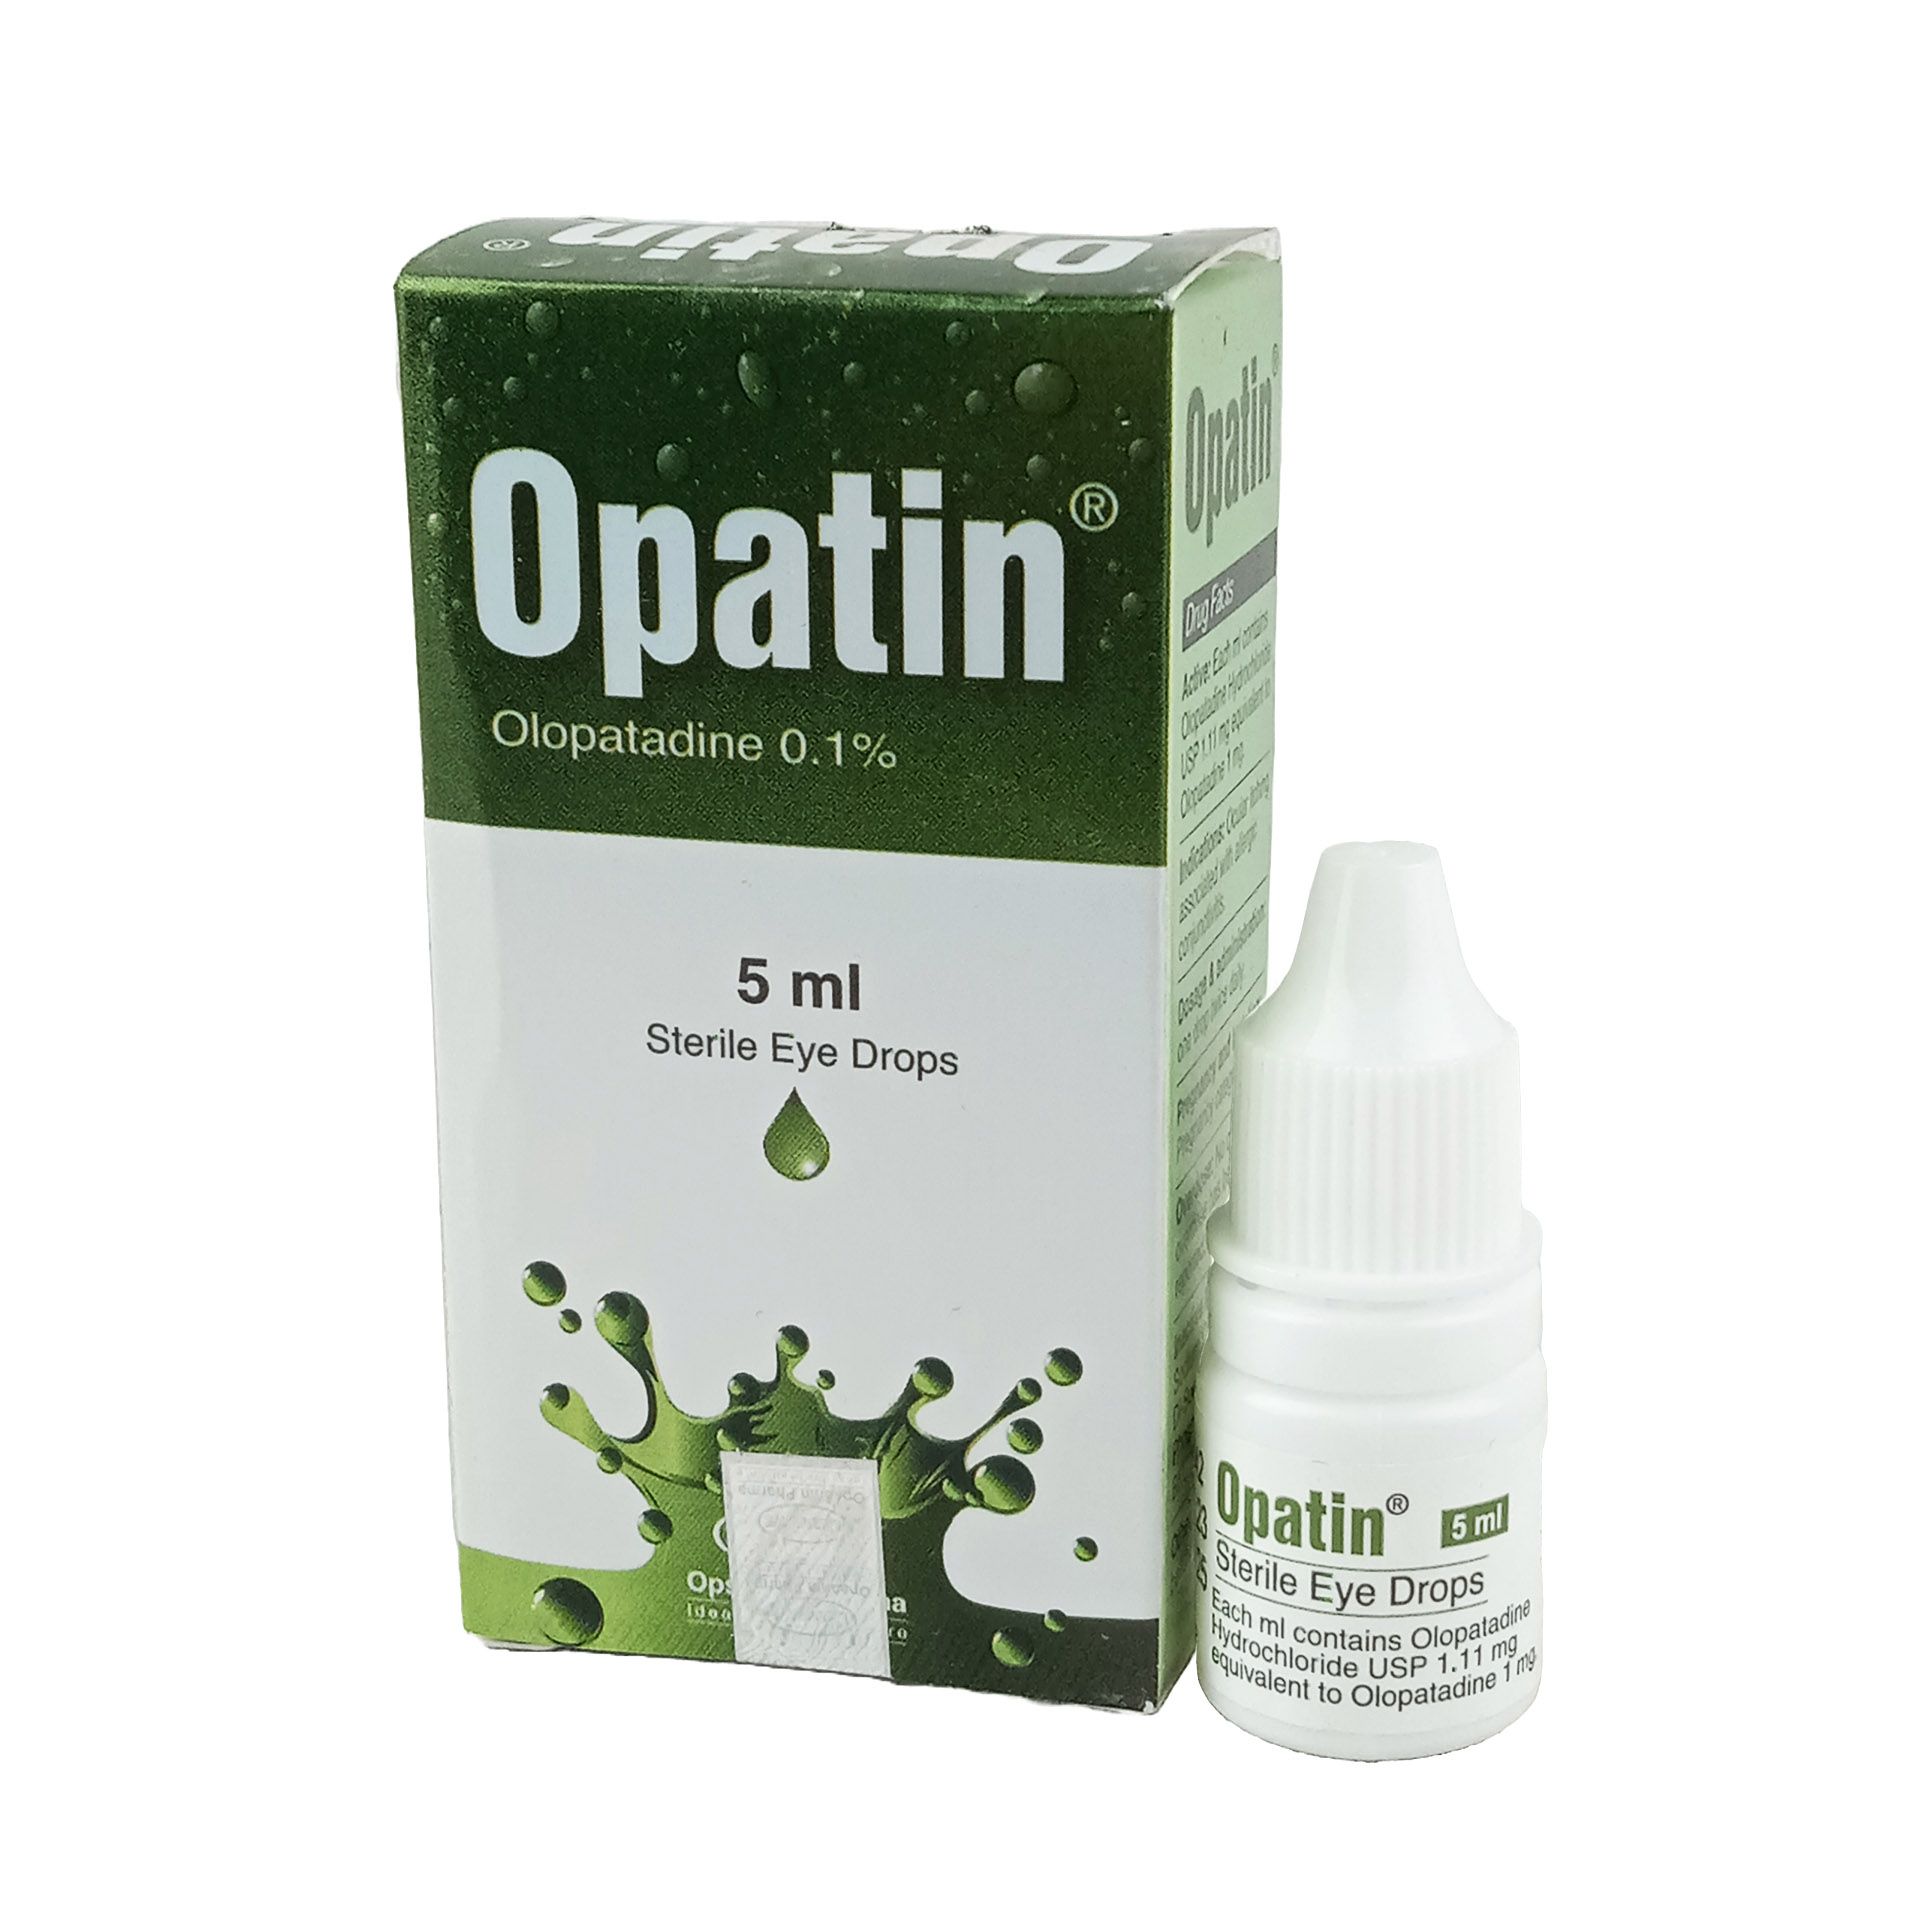 Opatin 0.10% Eye Drop